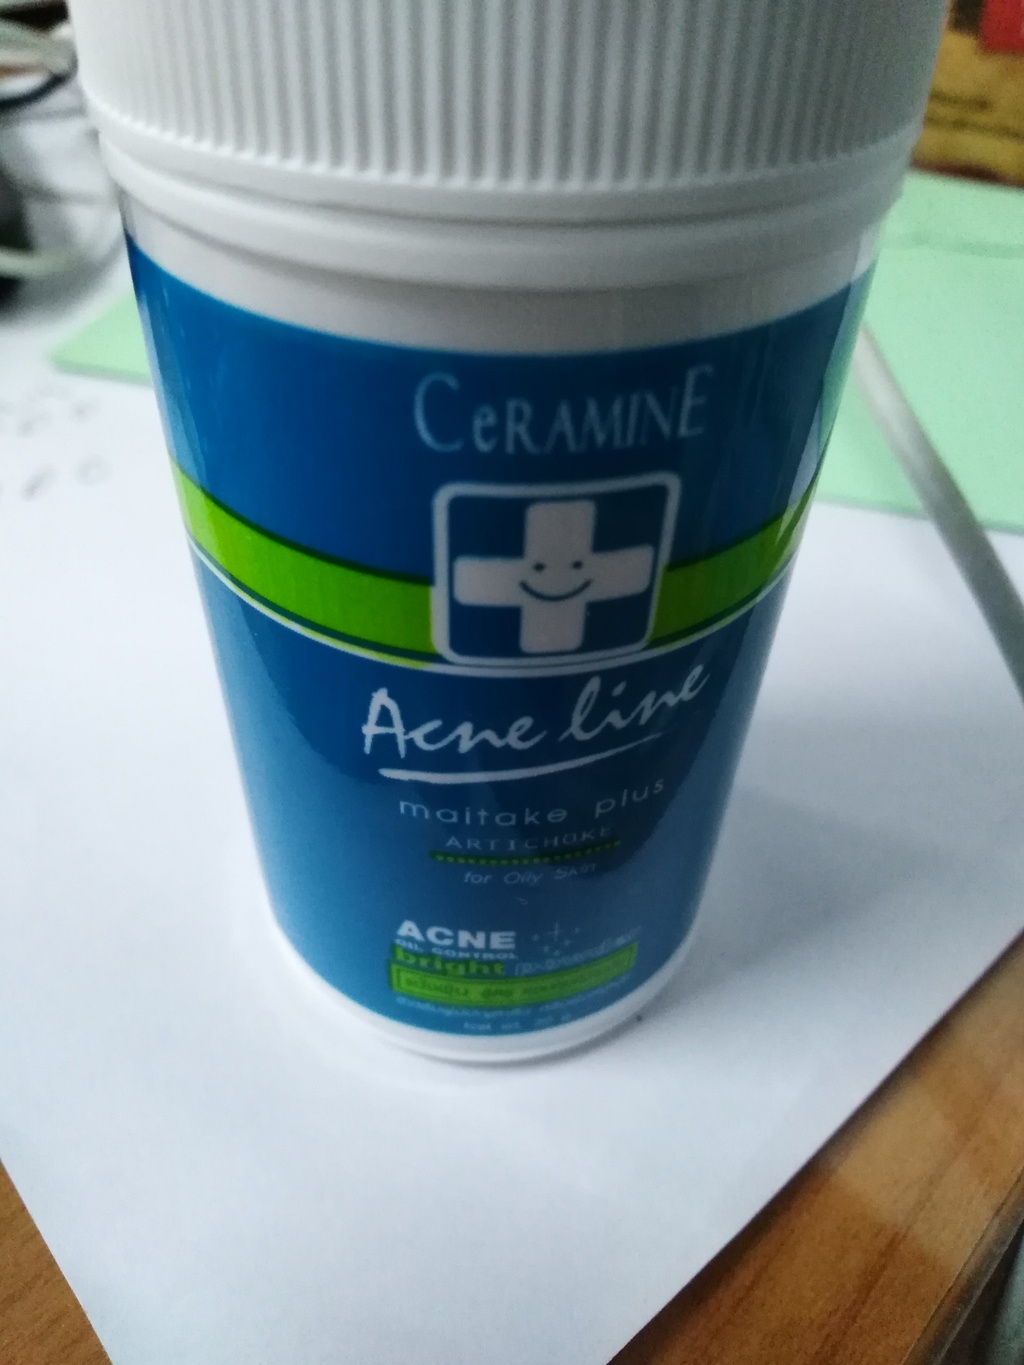 Ceramine Acne Line Maitake Plus Artichoke Acne Powder  รีวิว